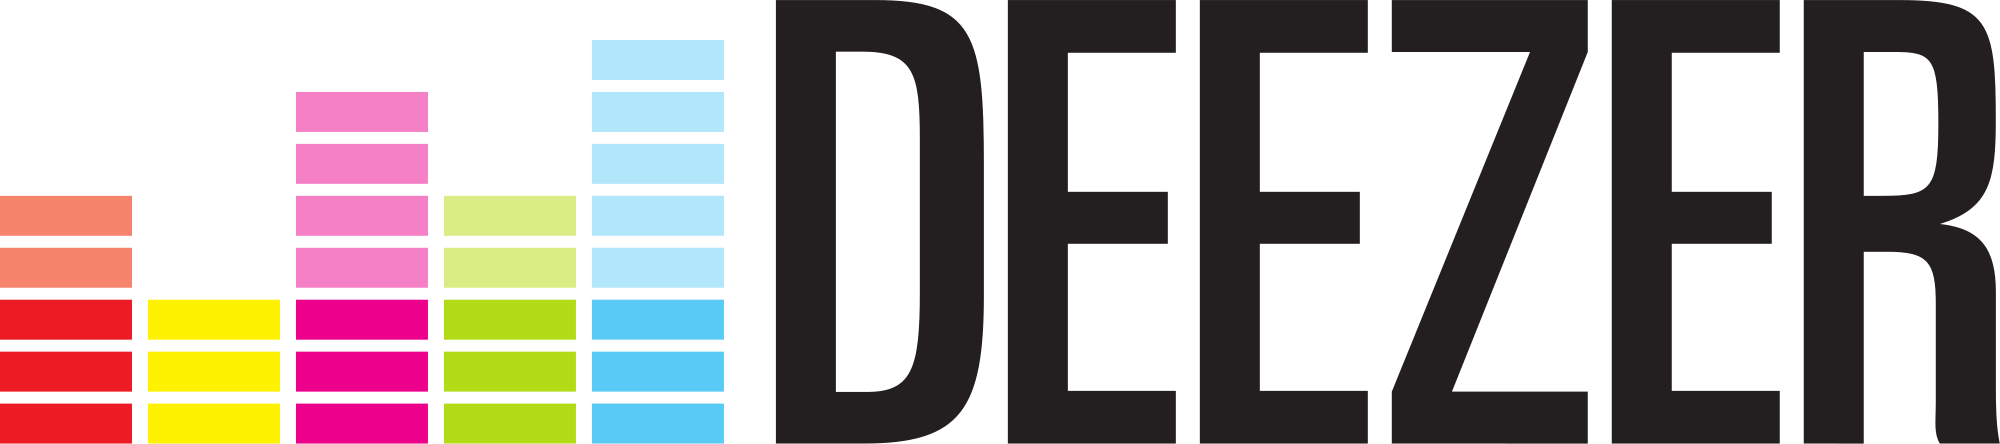 Deezer Logo - Deezer logo.svg